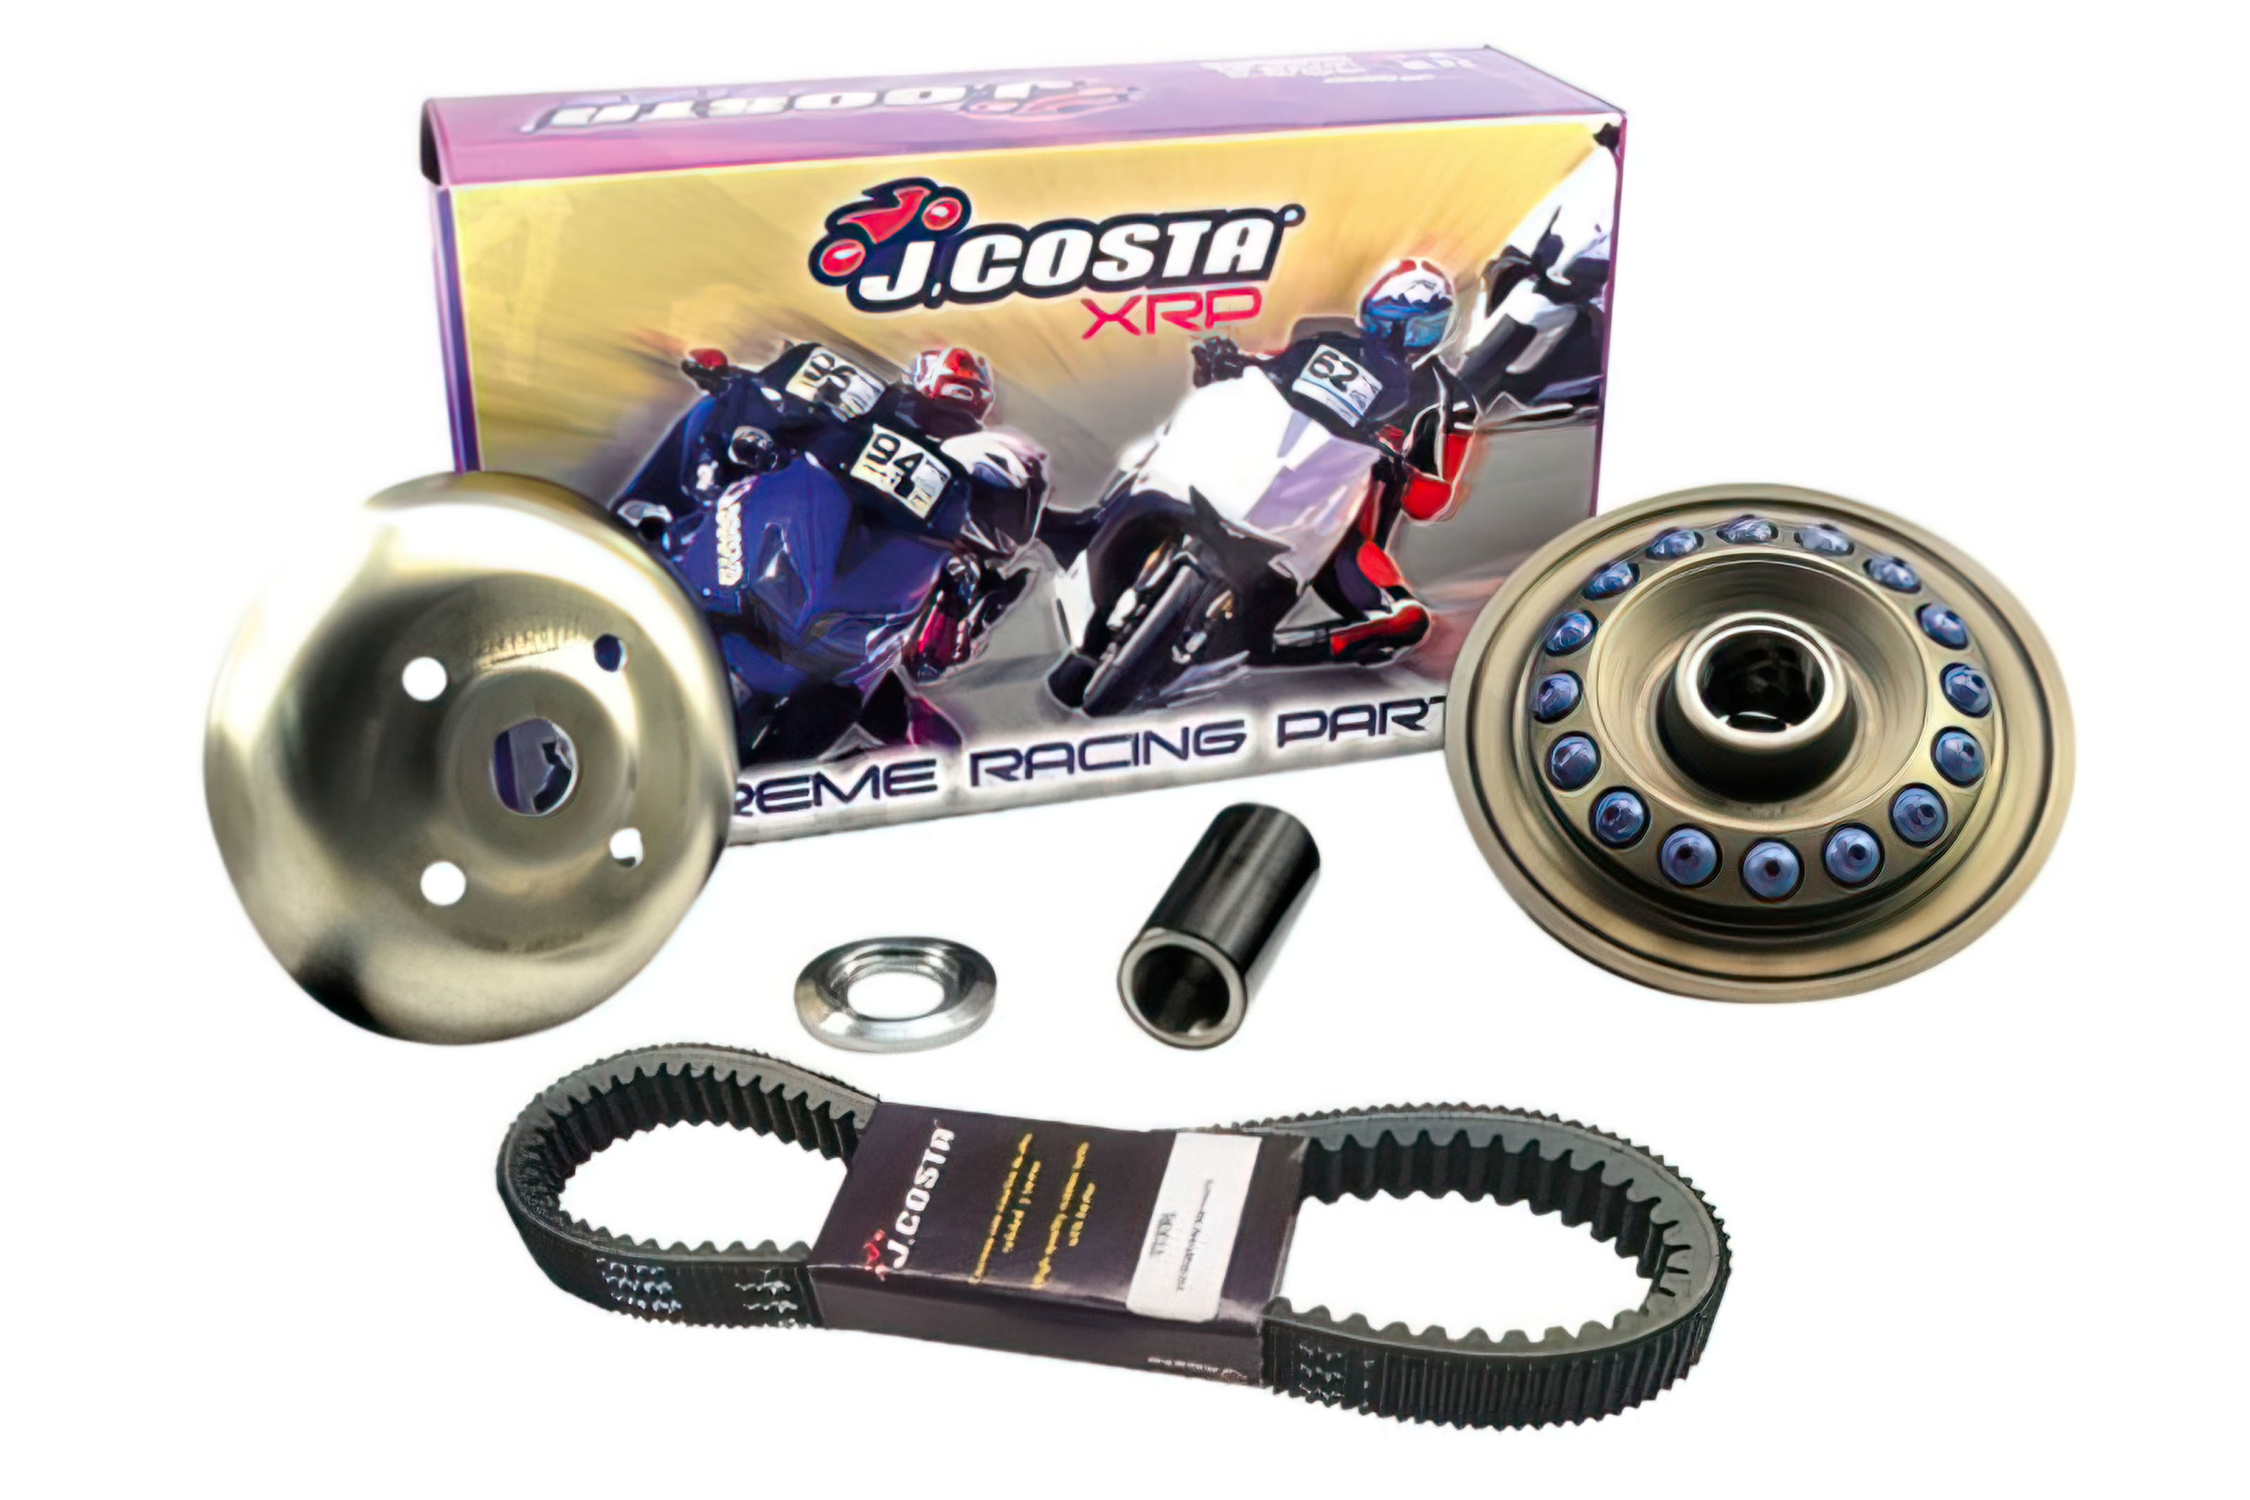 J.COSTA JC16034013016MB Rollers 